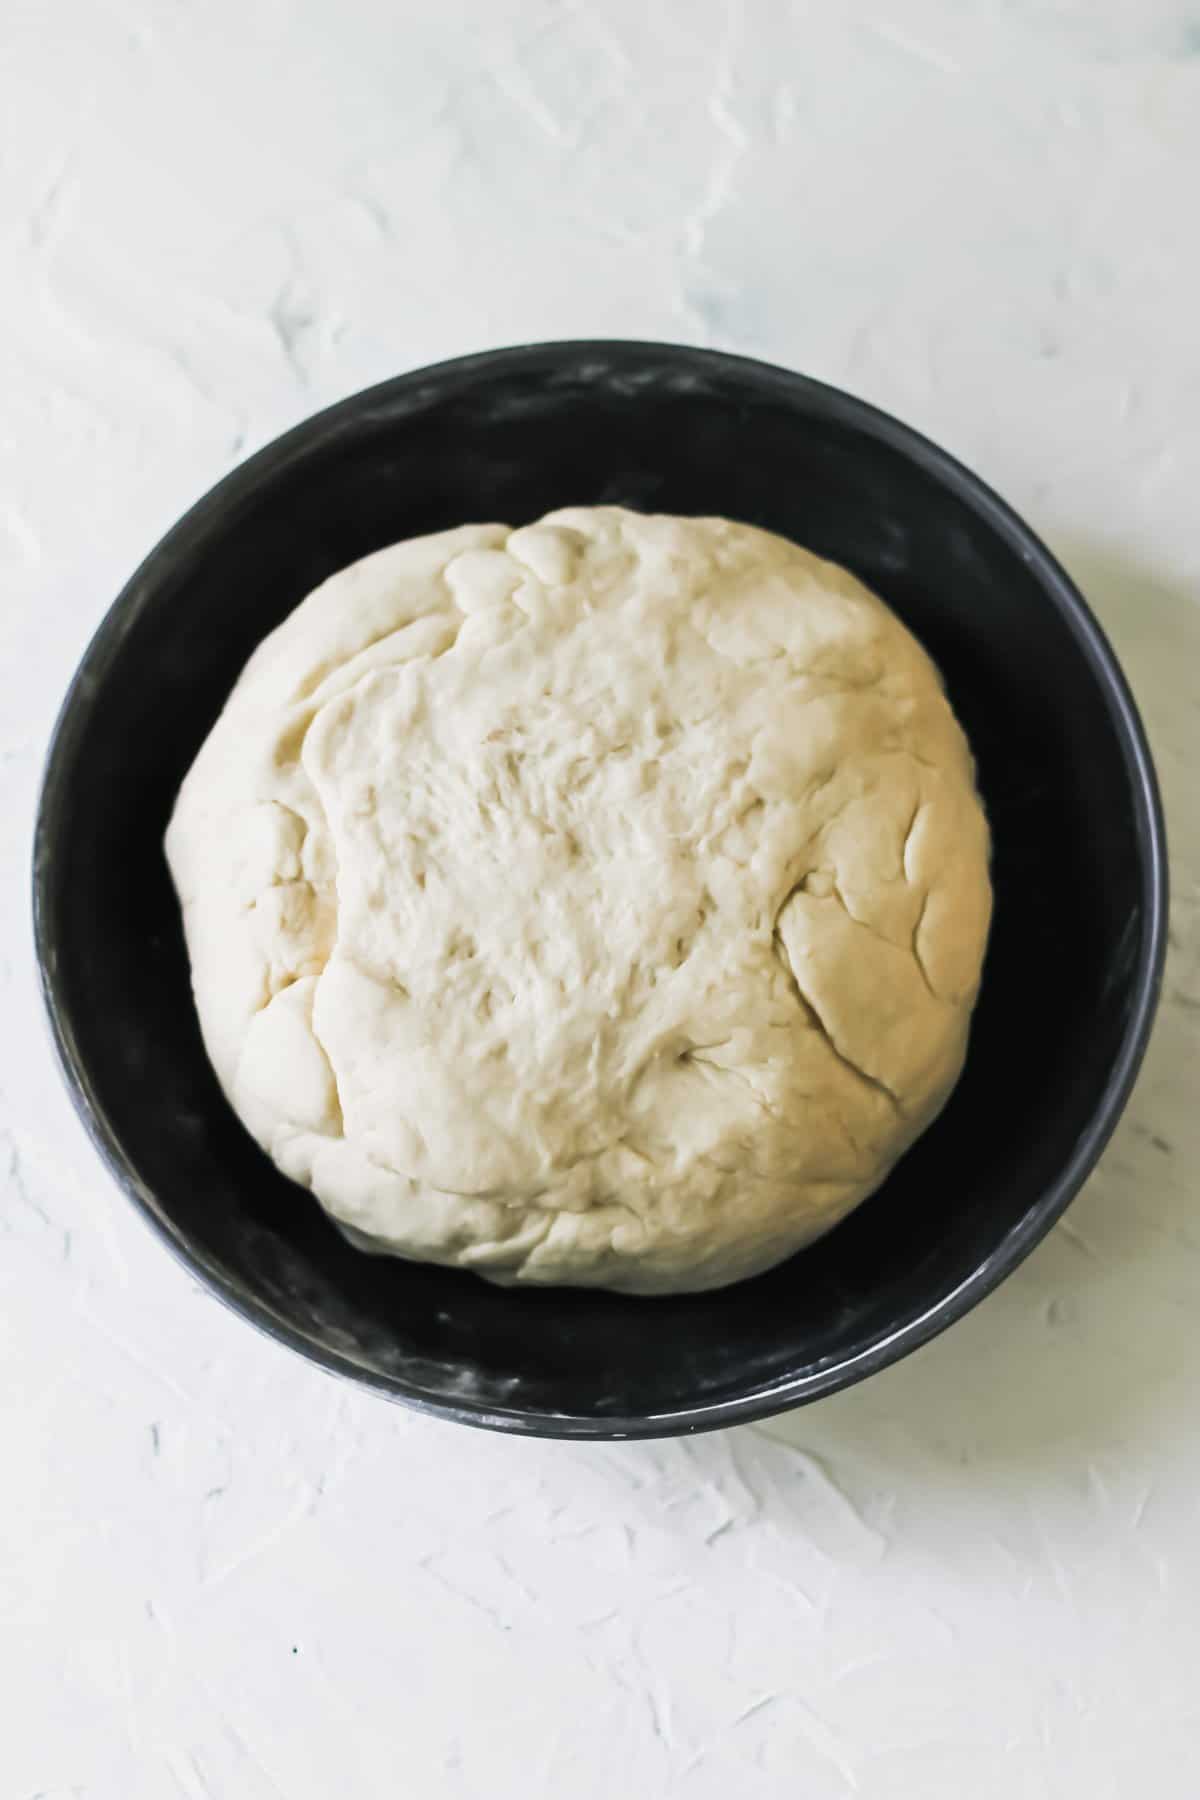 A ball of dumpling dough in a black bowl.